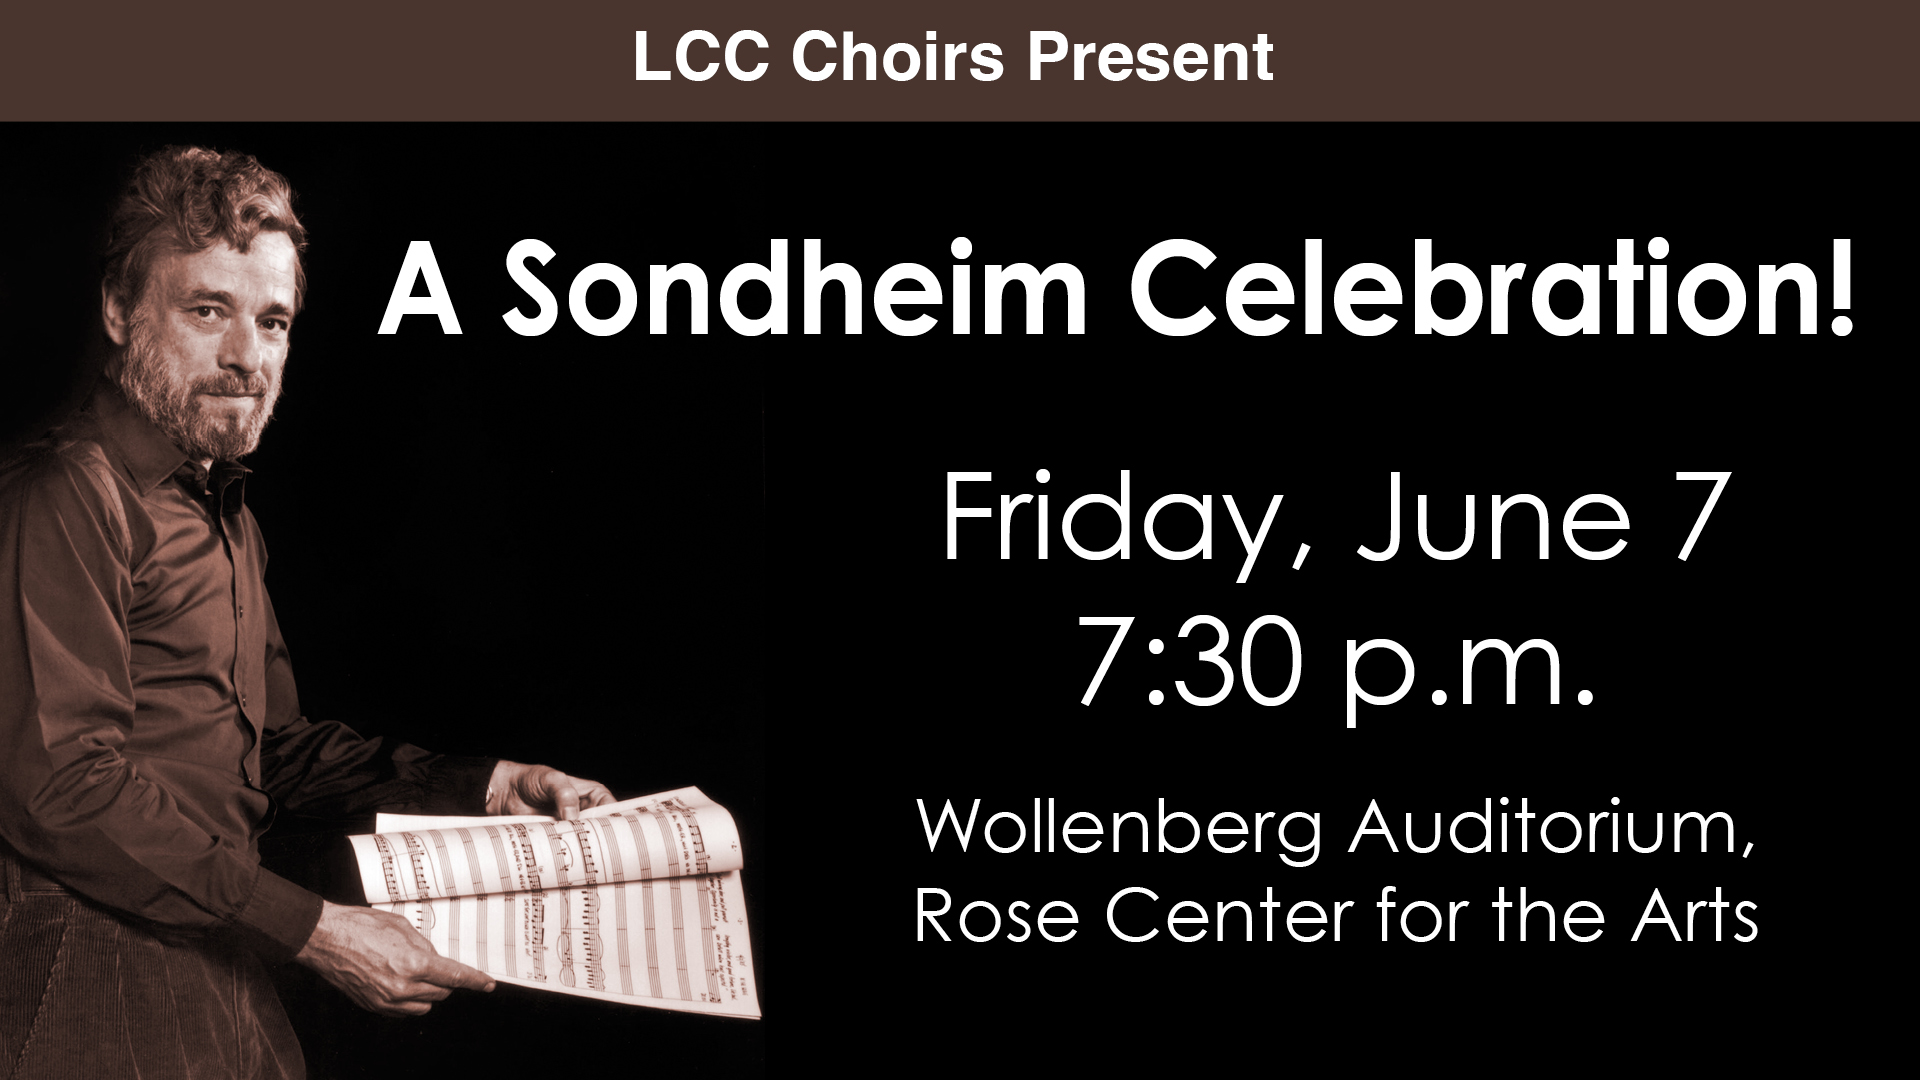 A sondheim celebration June 7th